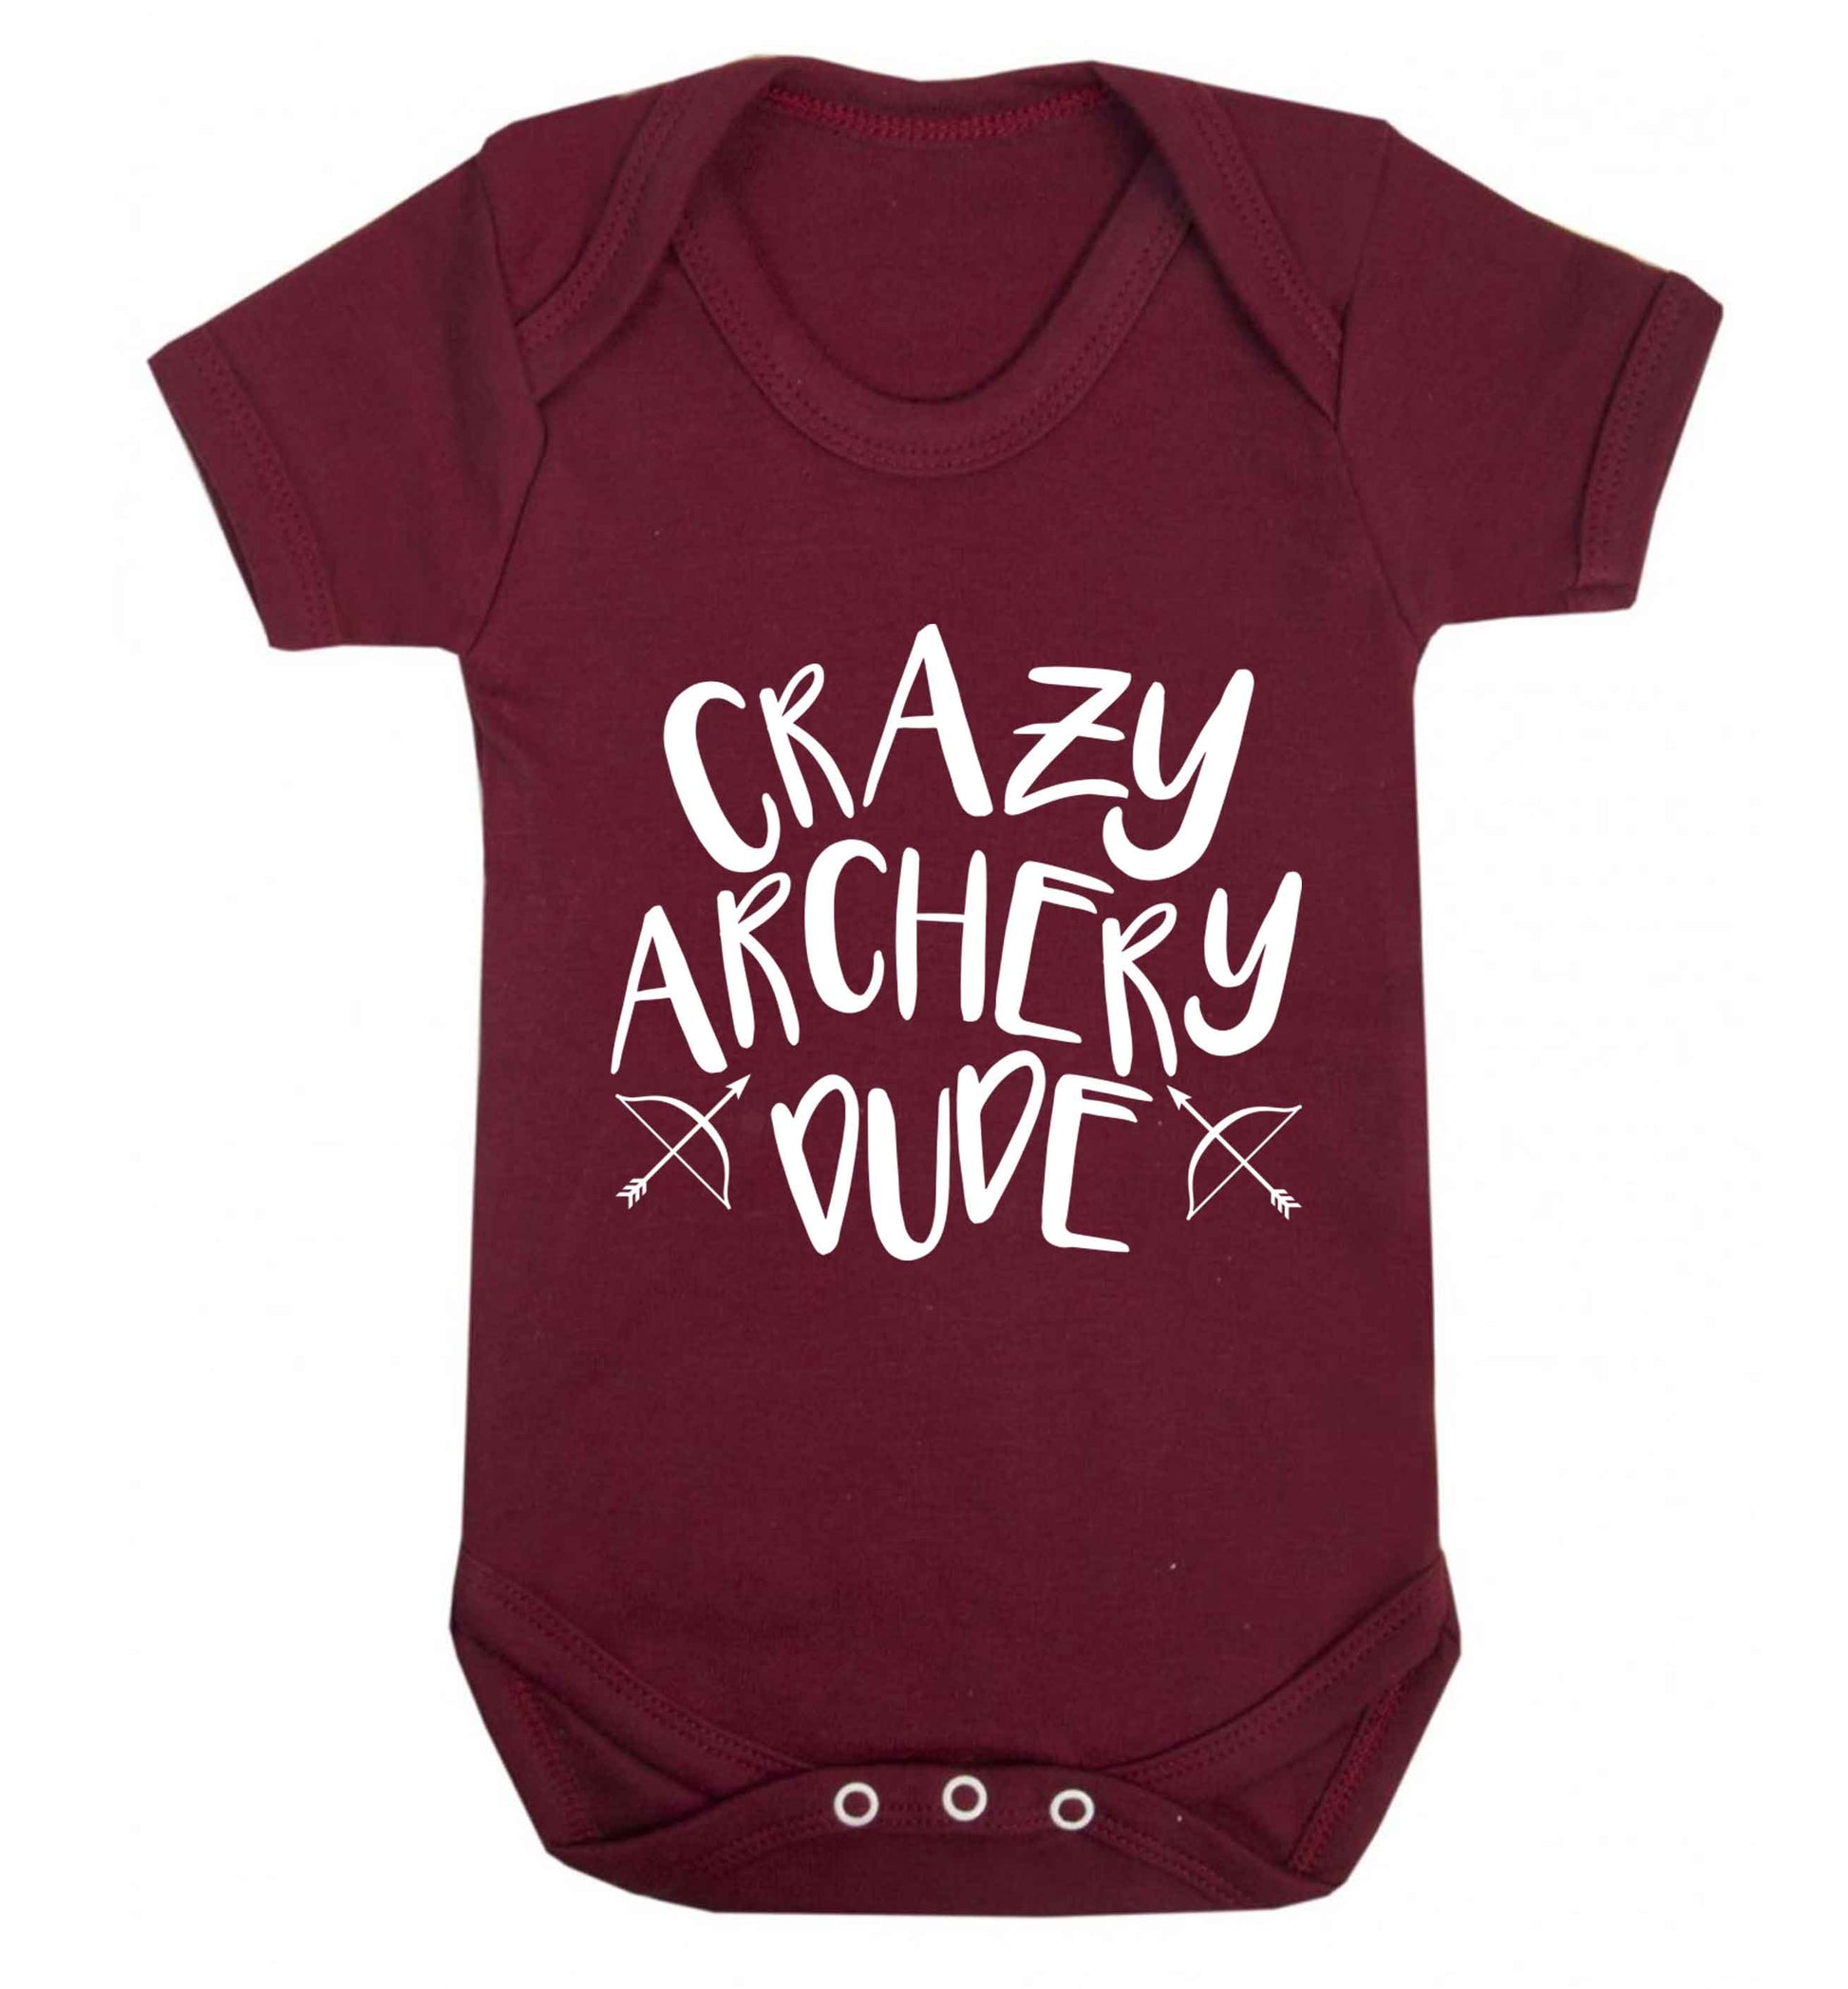 Crazy archery dude Baby Vest maroon 18-24 months